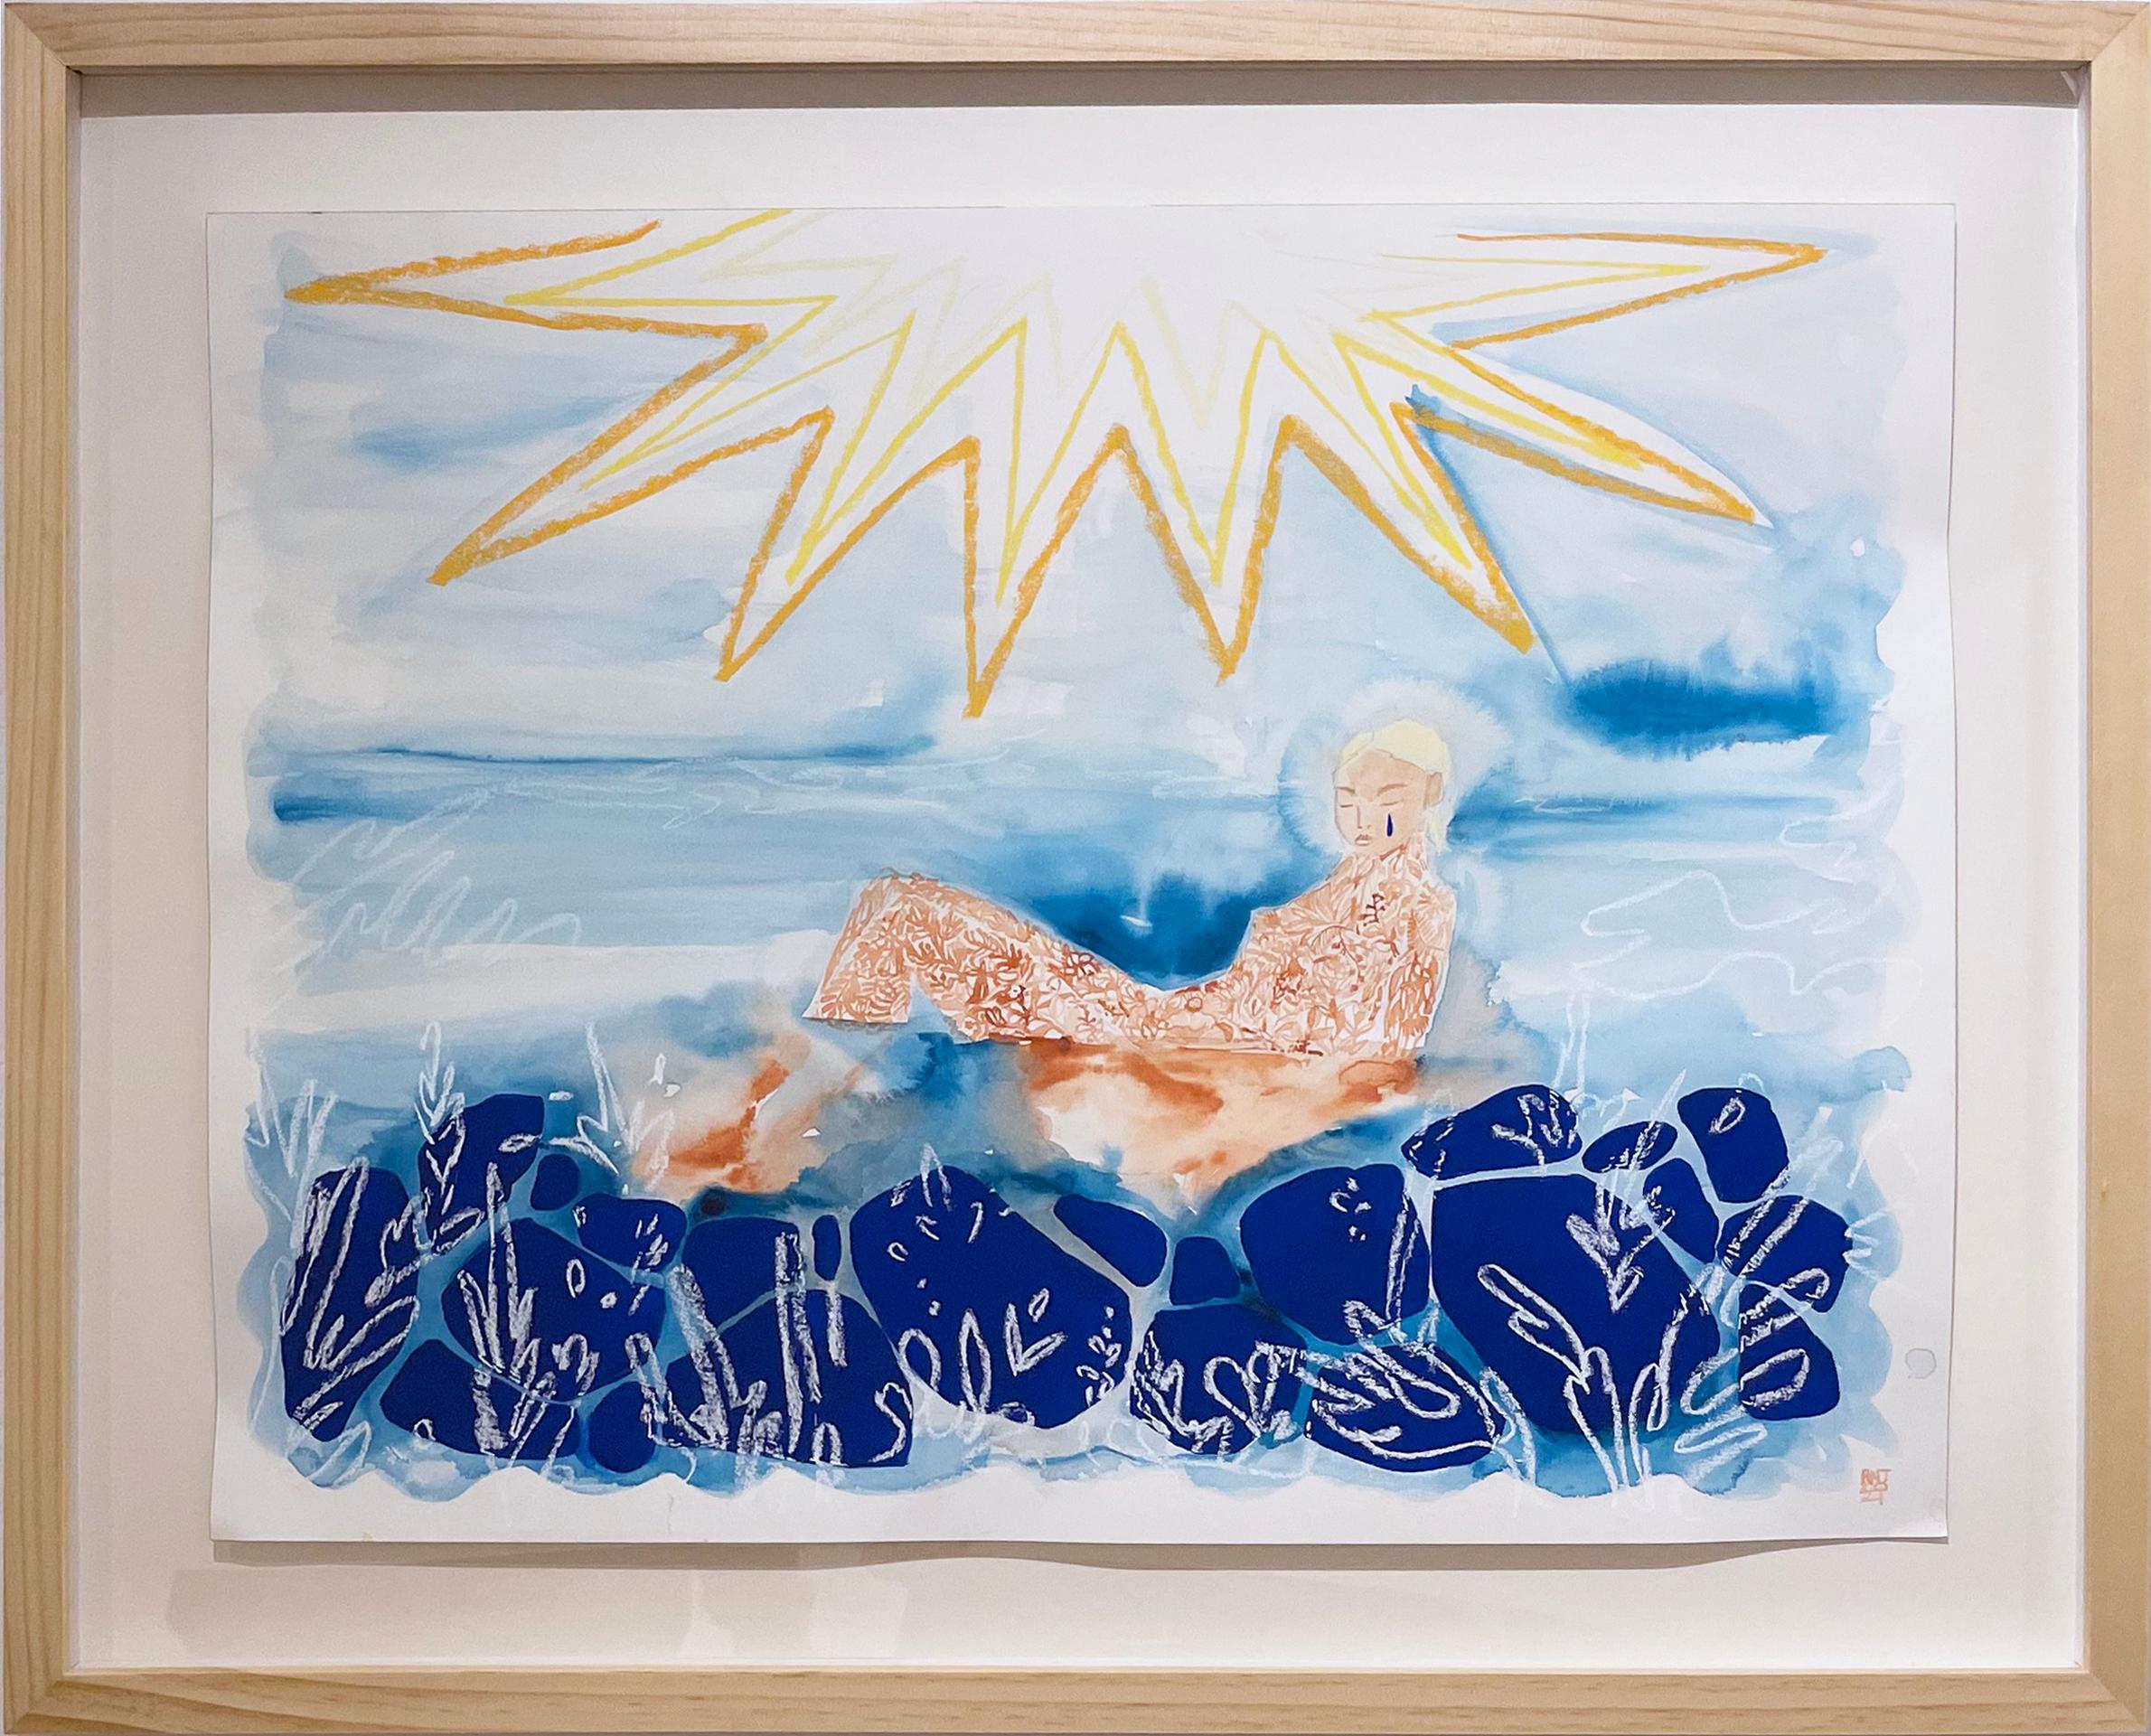 Sunbath, 2021, seascape, female figure, swimmer, ocean, sun, blue, yellow, gold - Contemporary Painting by Rebecca Johnson